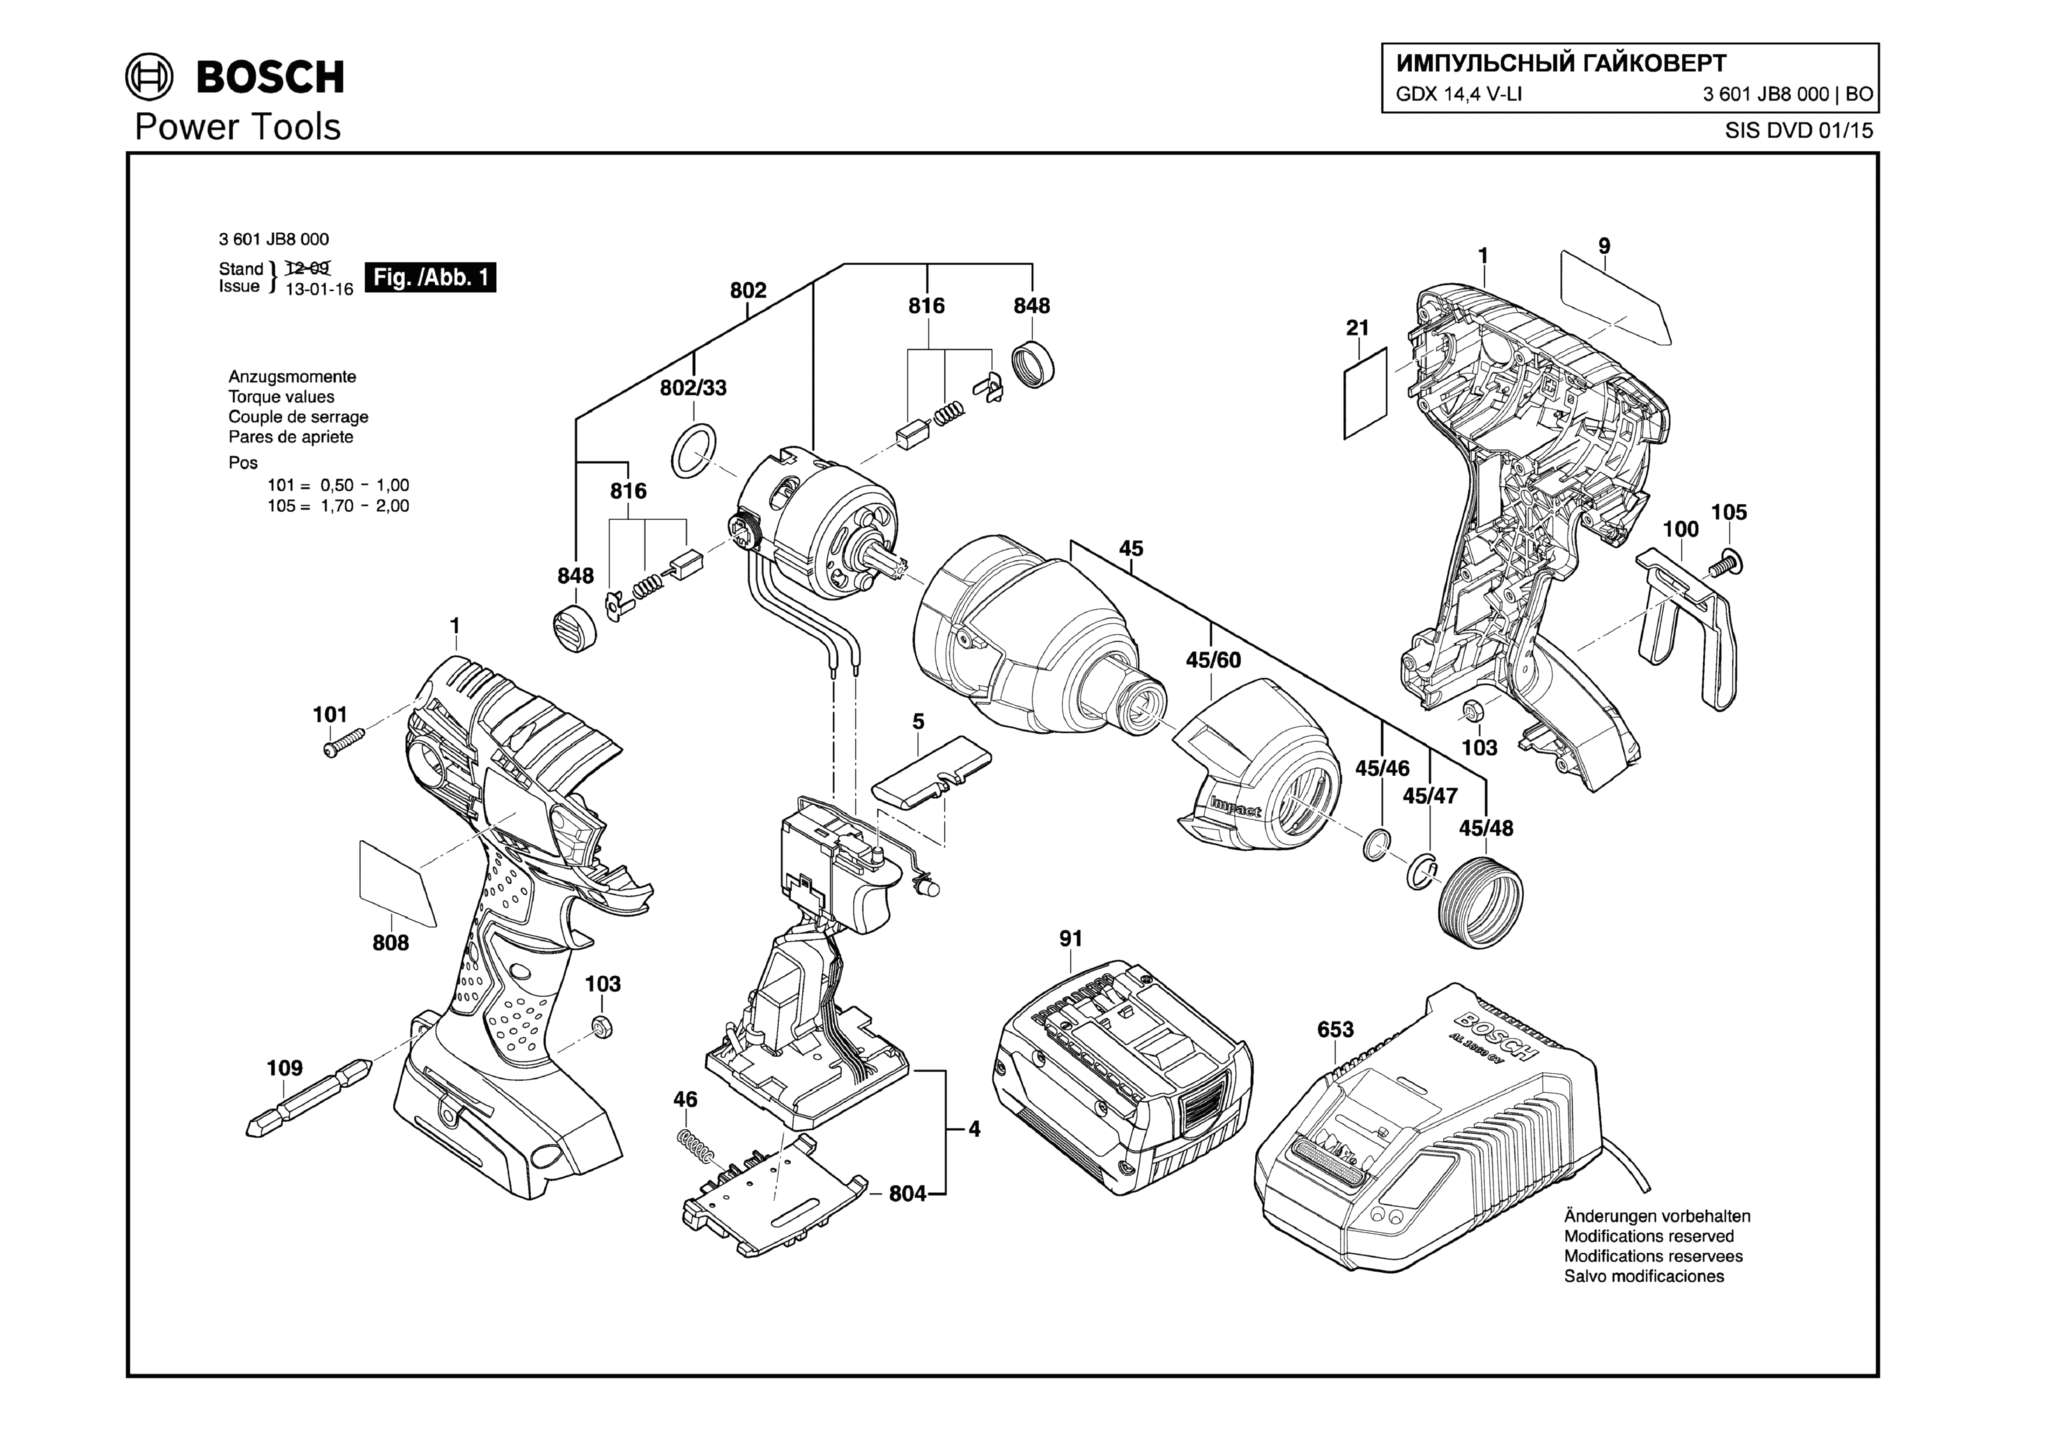 Запчасти, схема и деталировка Bosch GDX 14,4 V-LI (ТИП 3601JB8000)